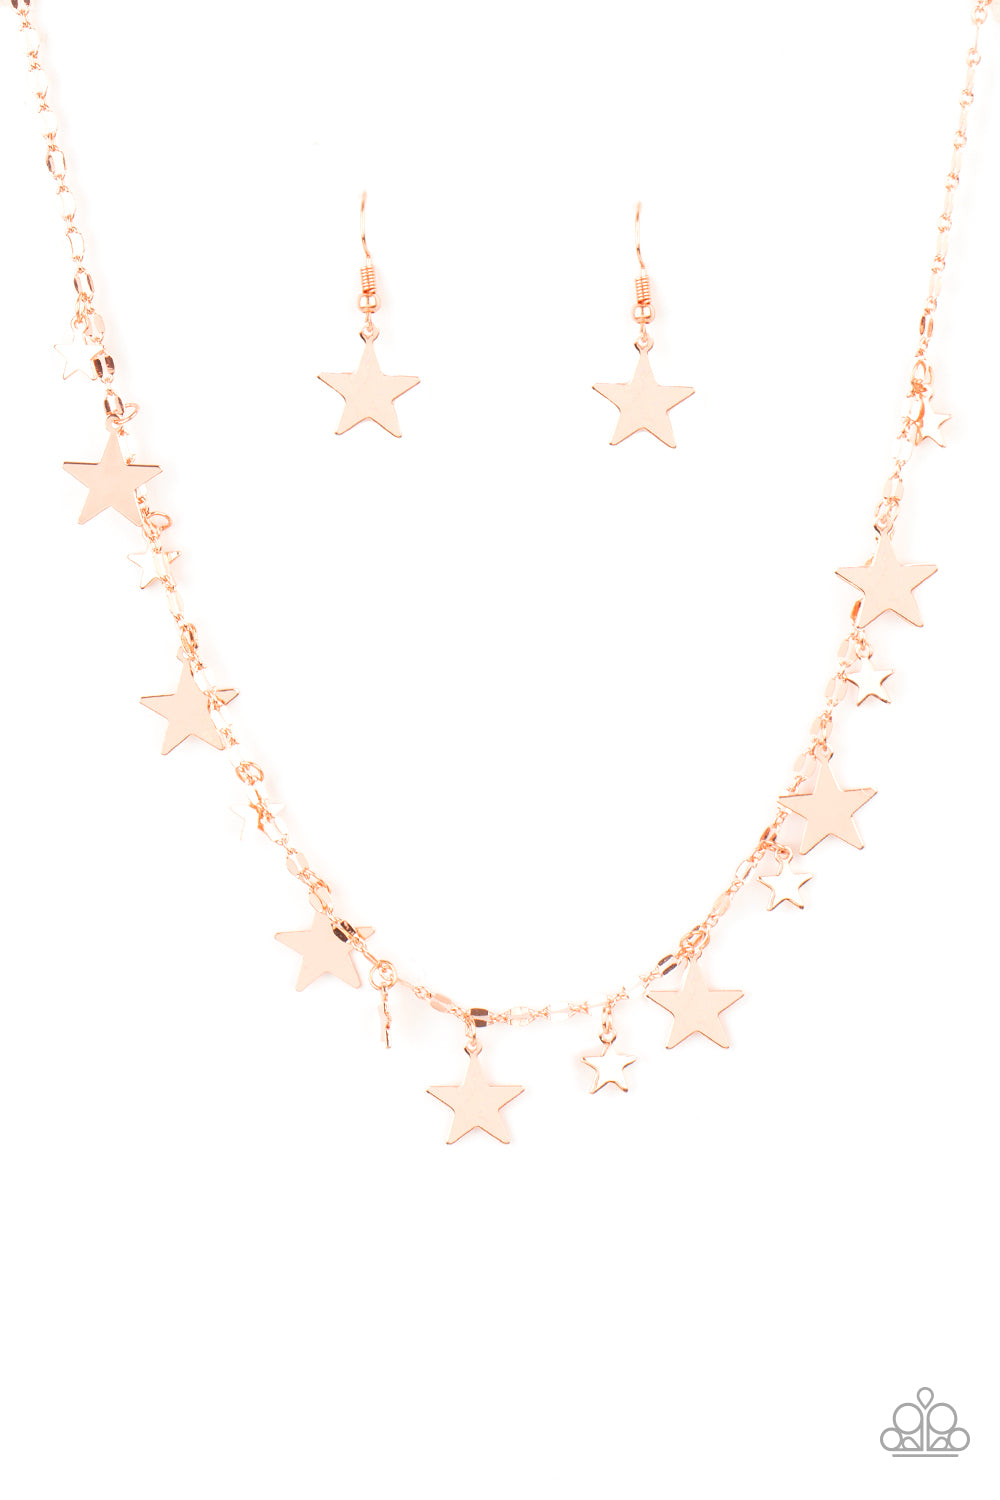 Starry Shindig - Copper Necklace freeshipping - JewLz4u Gemstone Gallery